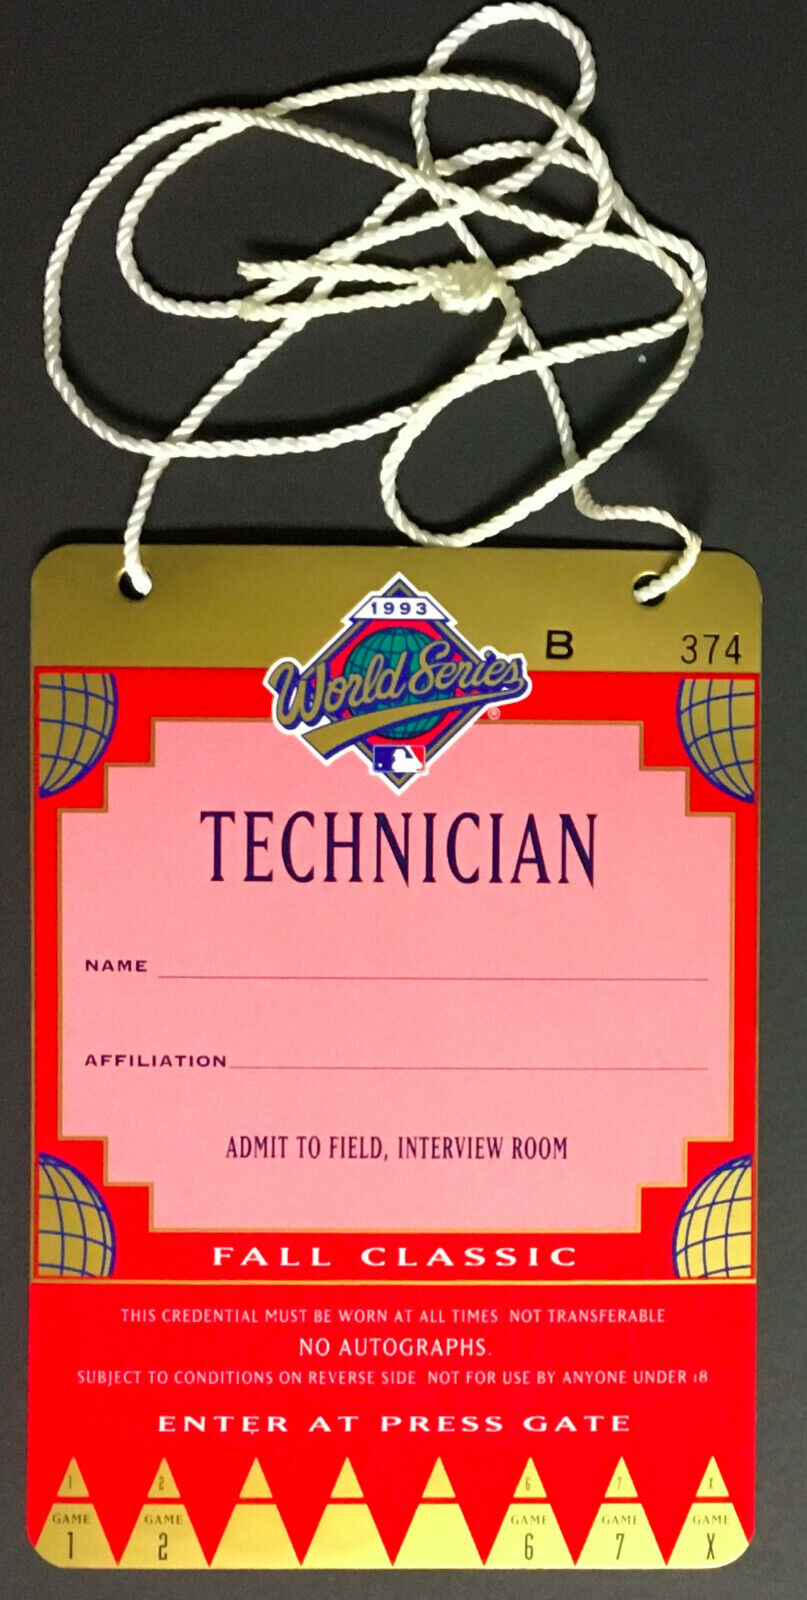 1993 World Series Baseball Technician Credentials Games 1,2,6 Toronto Blue Jays